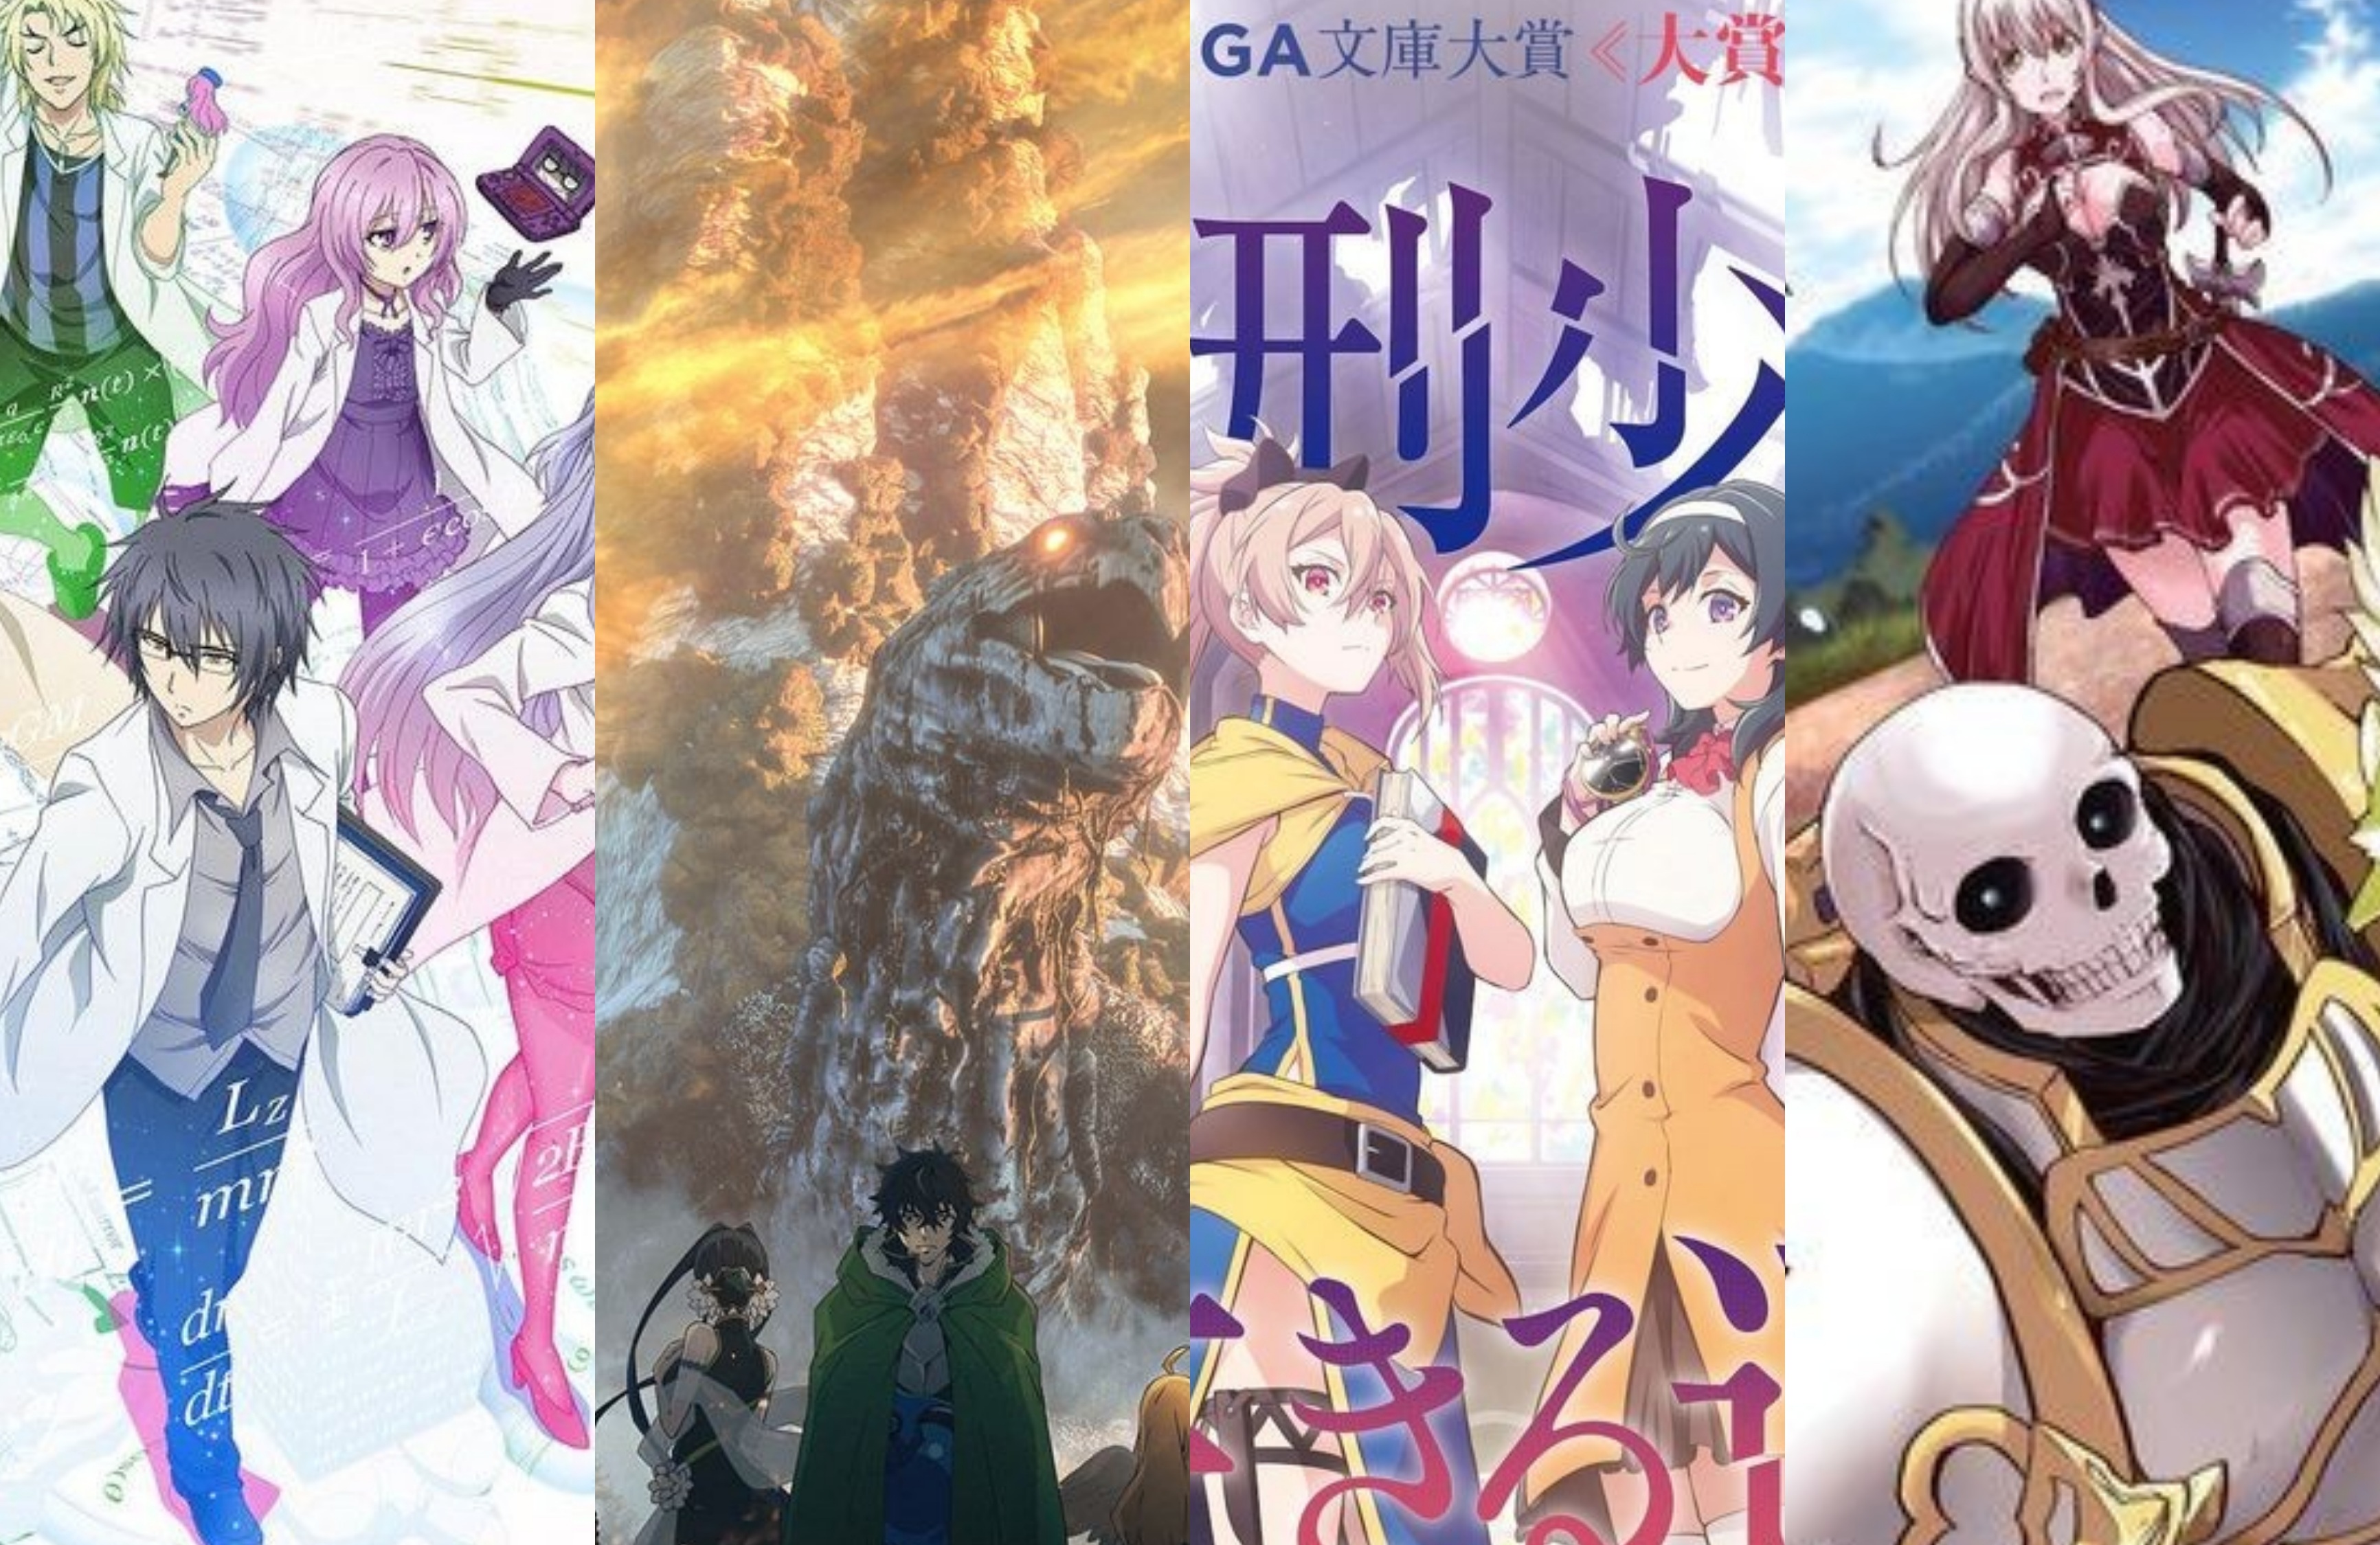 Anime Trending  Here is the Top 10 ANIME of THE WEEK of Week 8 of the  Winter 2017 Anime Season Winter 2017 Anime Voting Link  httpsgooglaJmpdx Character Polls httpsgoogldaHO5U Soundtrack  Polls